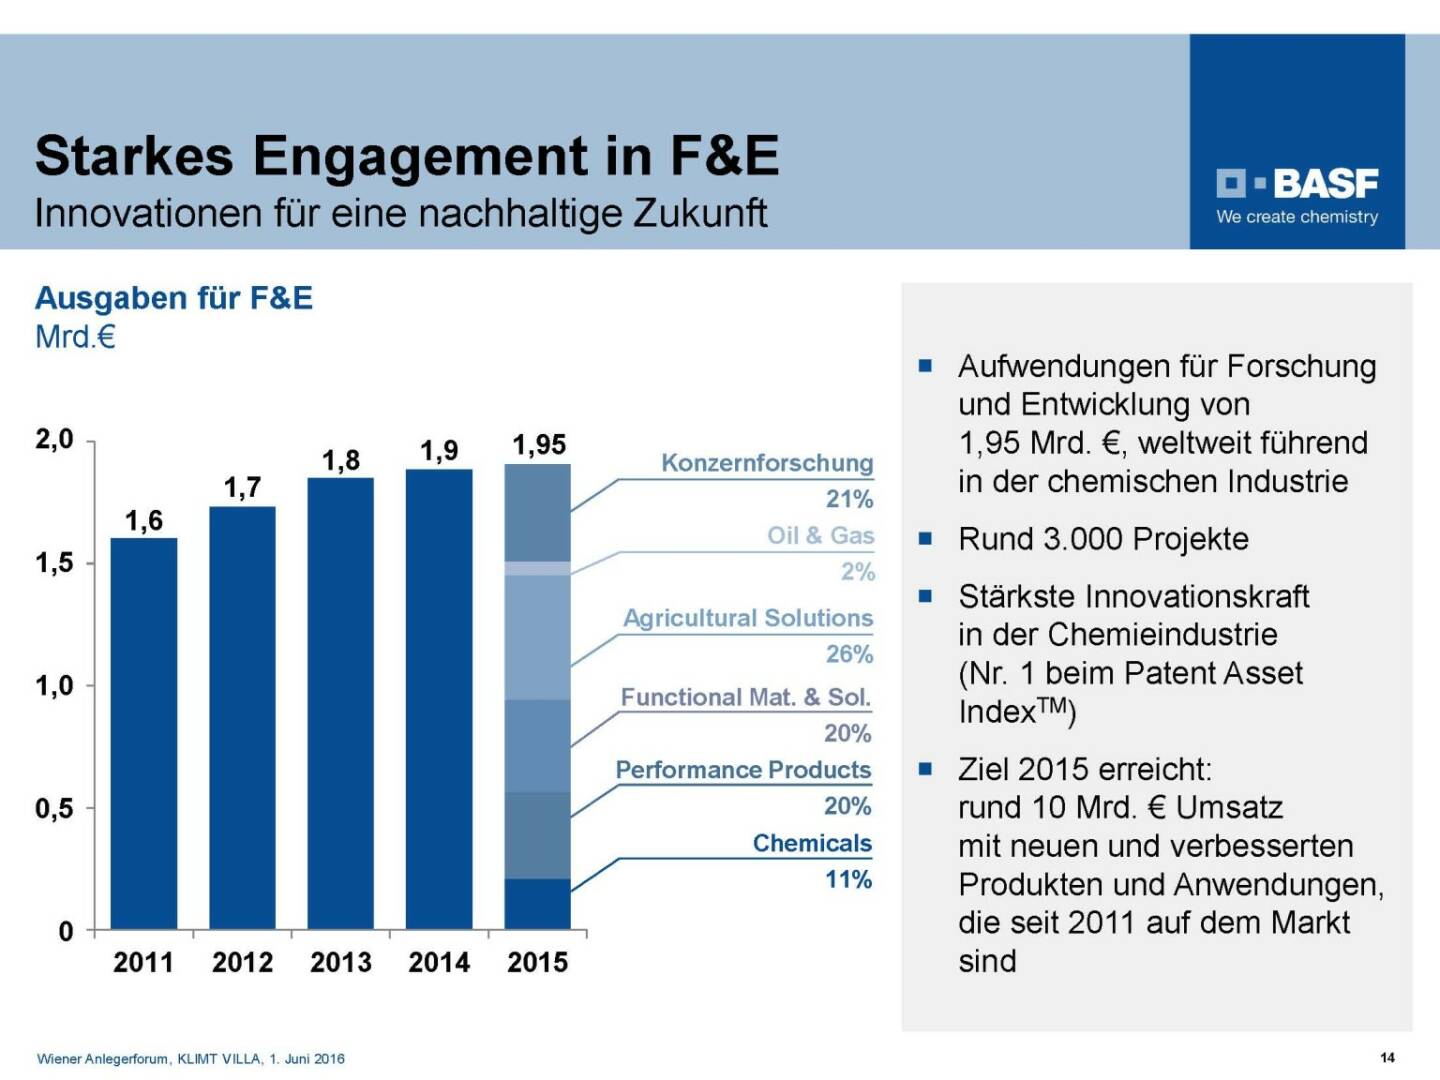 BASF - Starkes Engagement in F&E